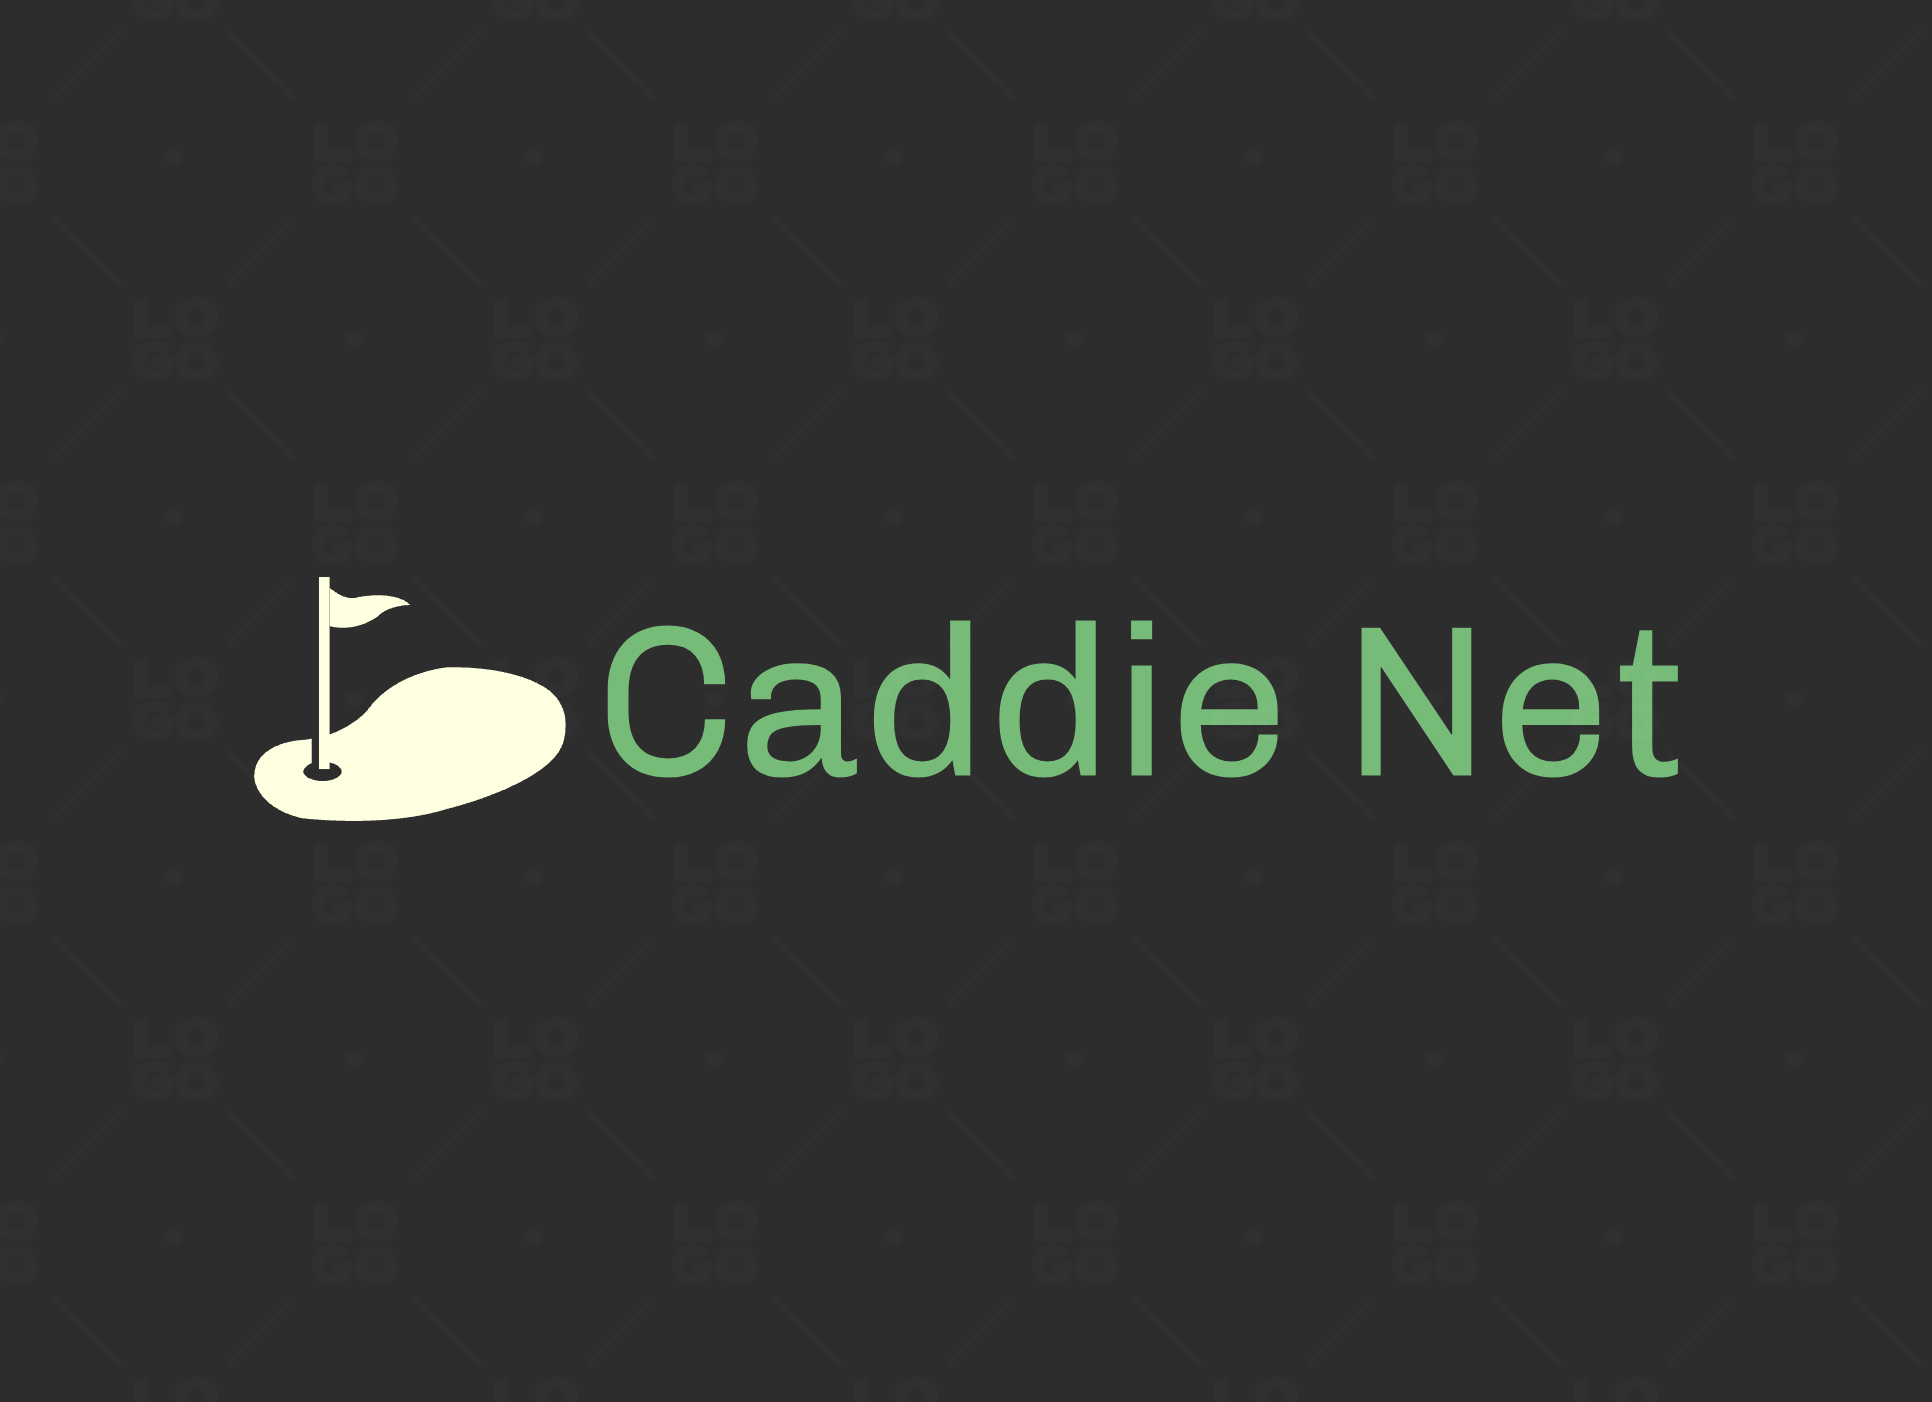 CaddieNet.com